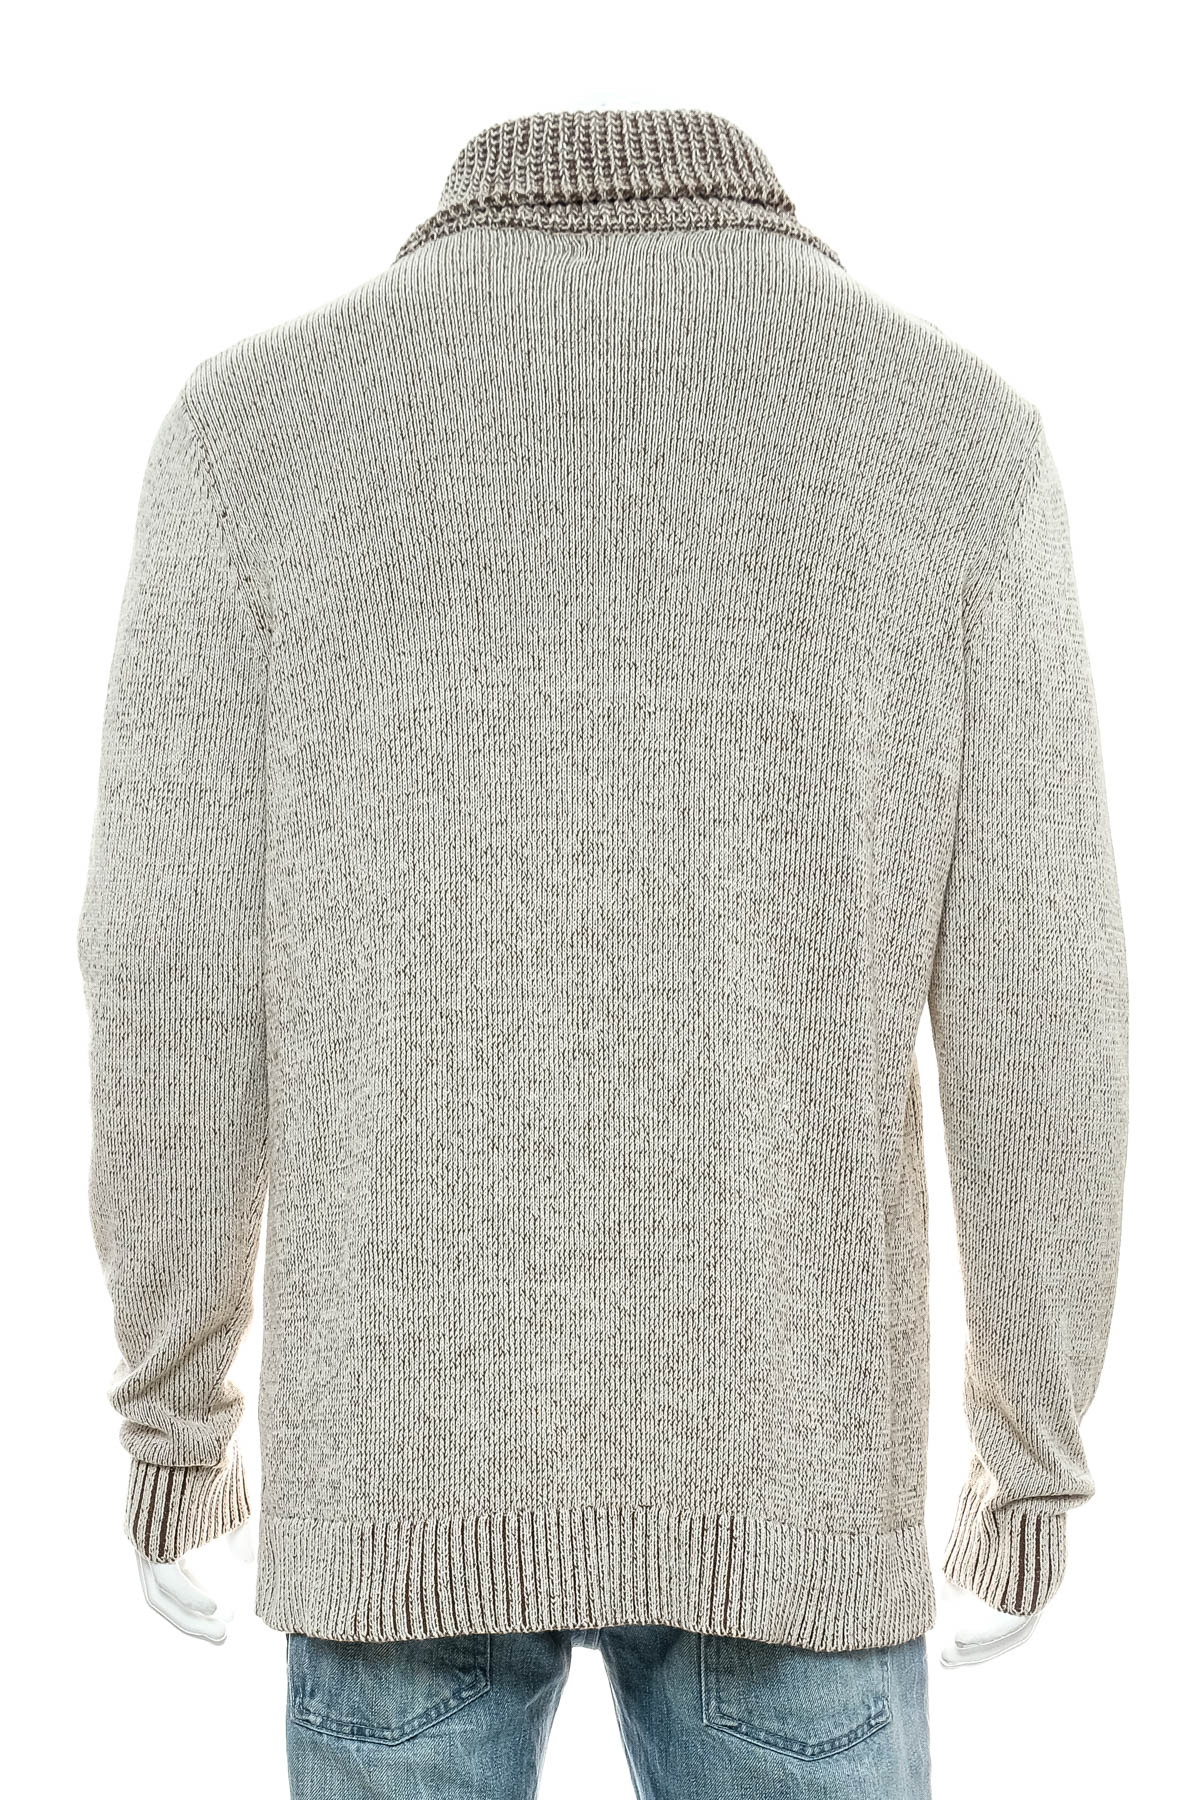 Men's sweater - GUESS - 1